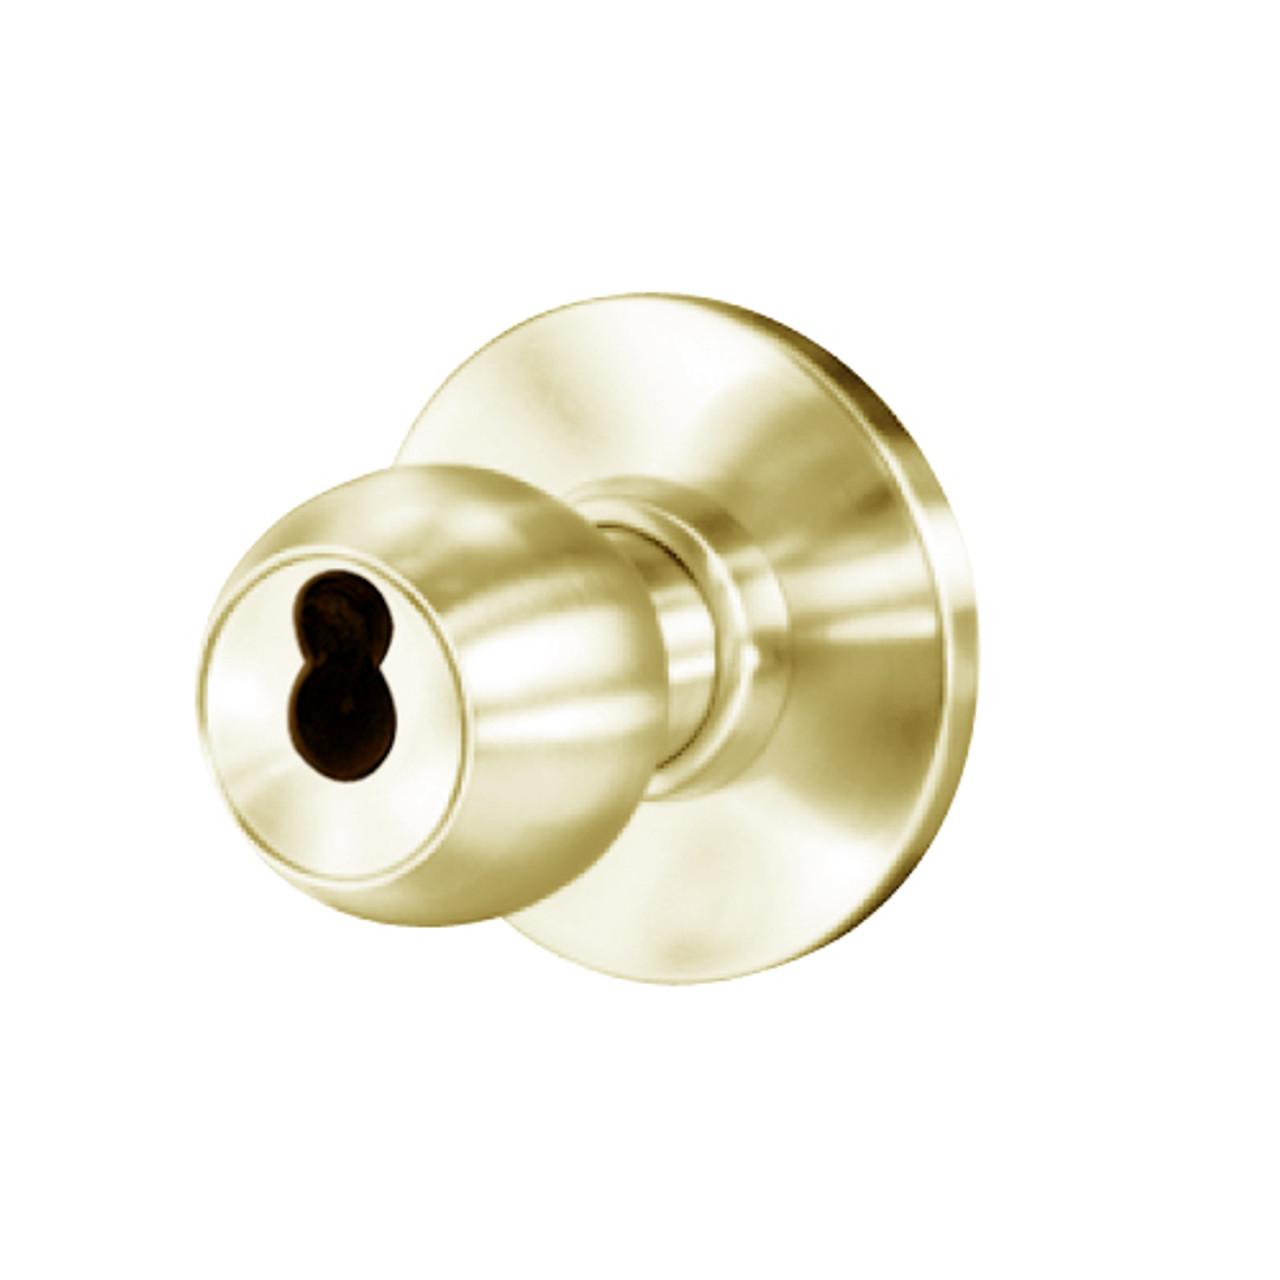 8K57YR4ASTK606 Best 8K Series Exit Heavy Duty Cylindrical Knob Locks with Round Style in Satin Brass